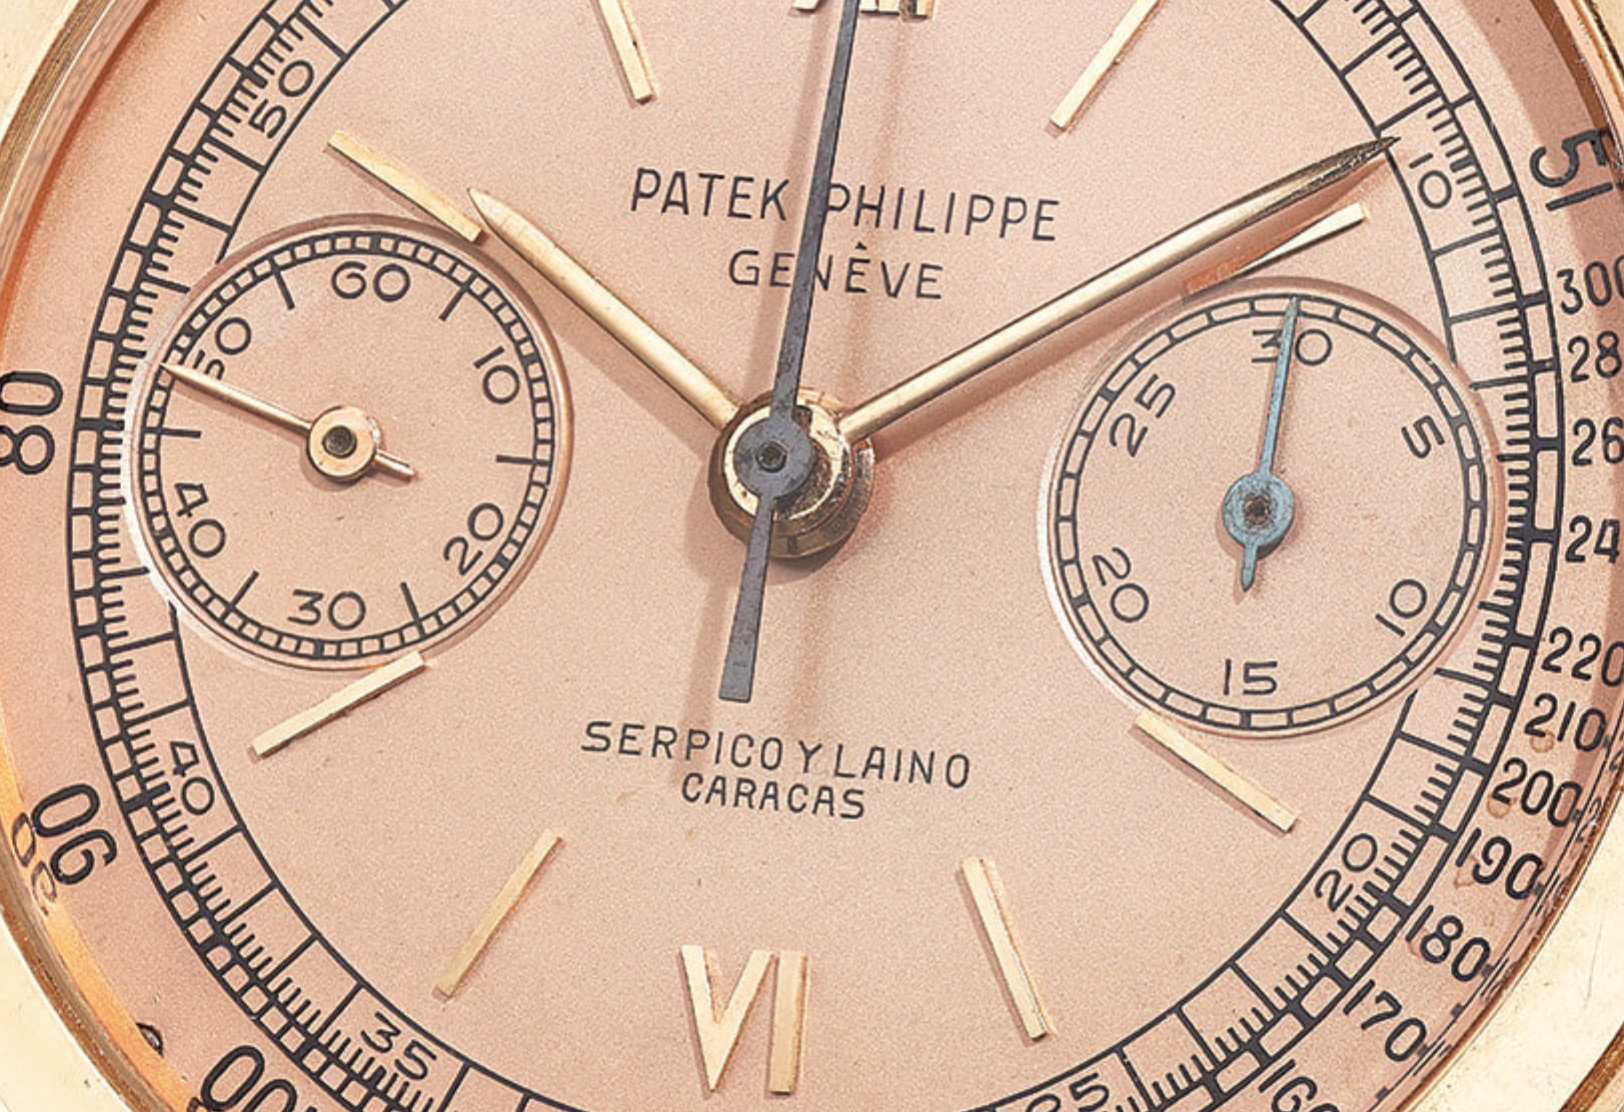 210 Patek Philippe Geneve ideas  patek philippe, patek philippe watches,  watches for men